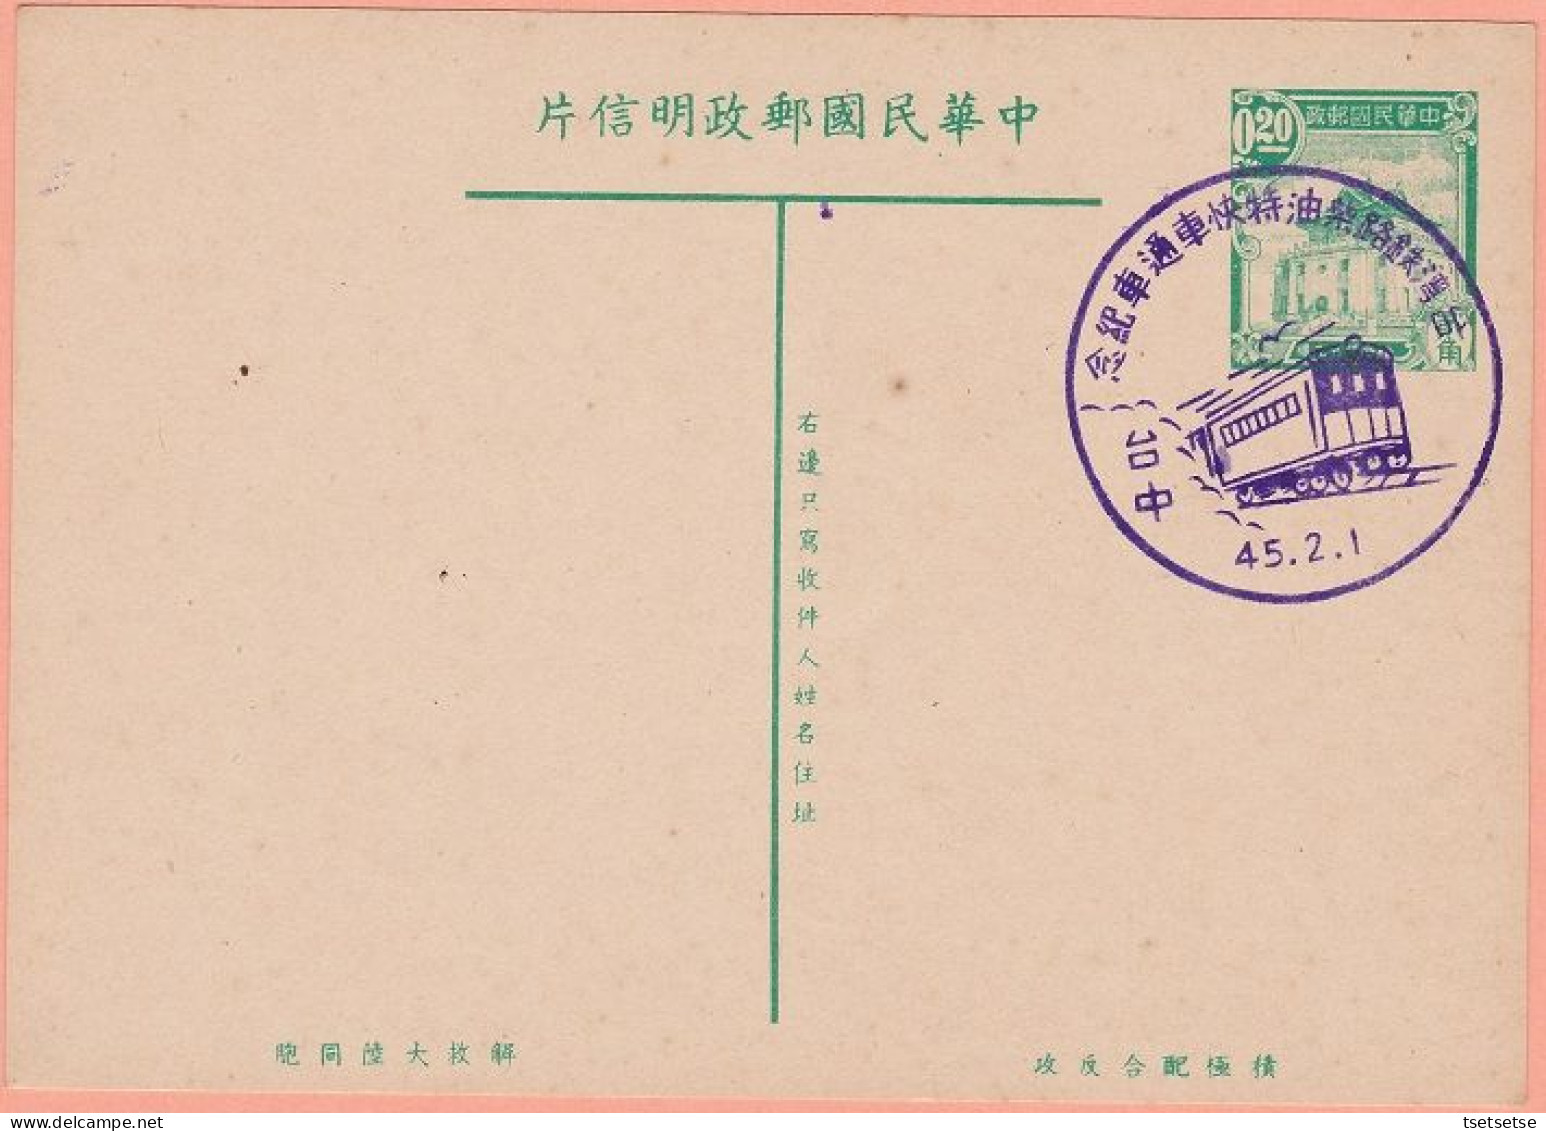 1956 RO China Taiwan Train Express Postcard - Postal Stationery